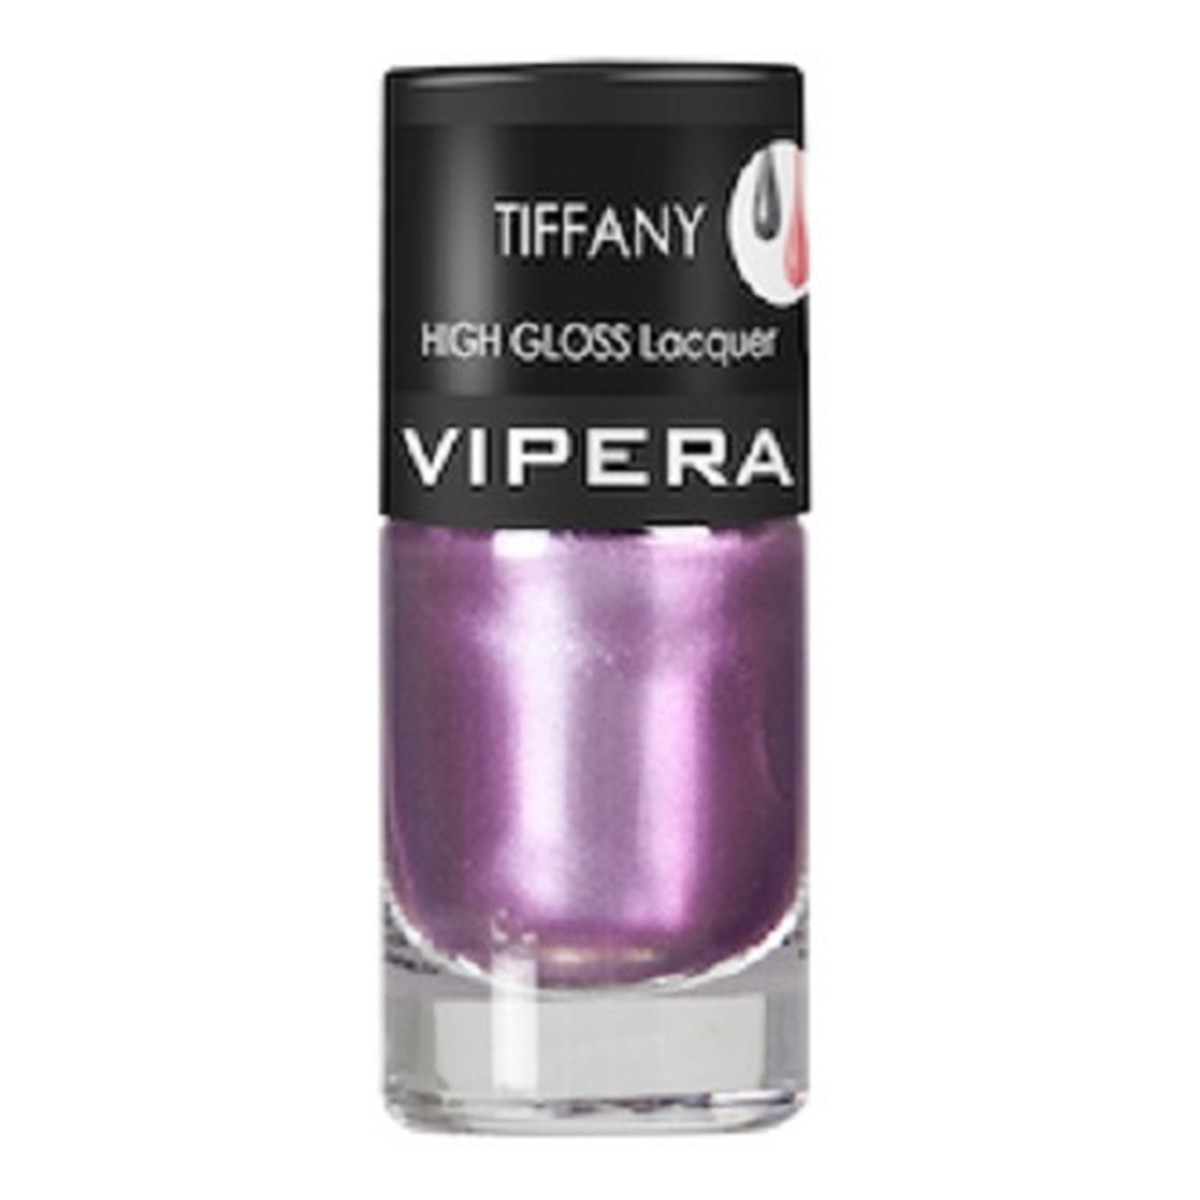 Vipera Tiffany High Gloss świetlisty lakier do paznokci 6ml